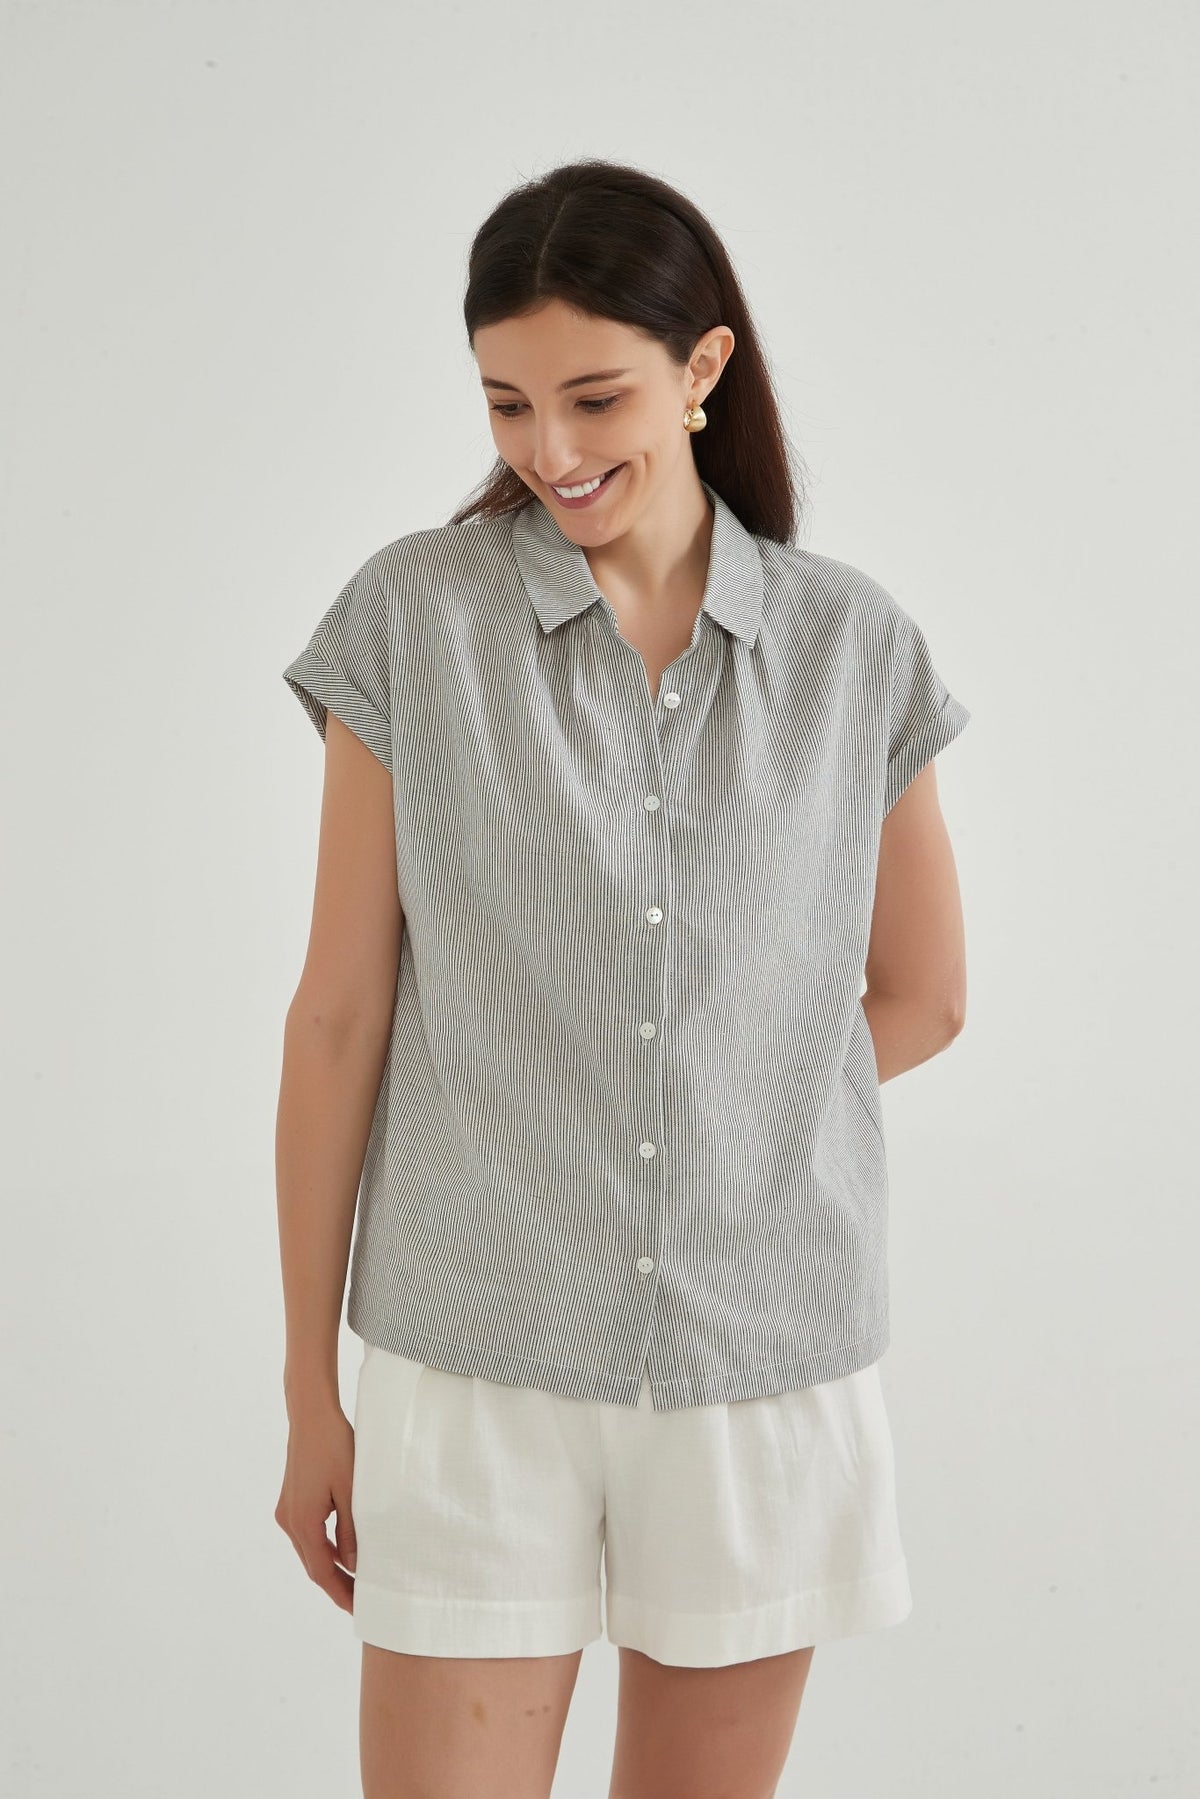 Clio Cap Sleeve Shirt - Whisper Mint